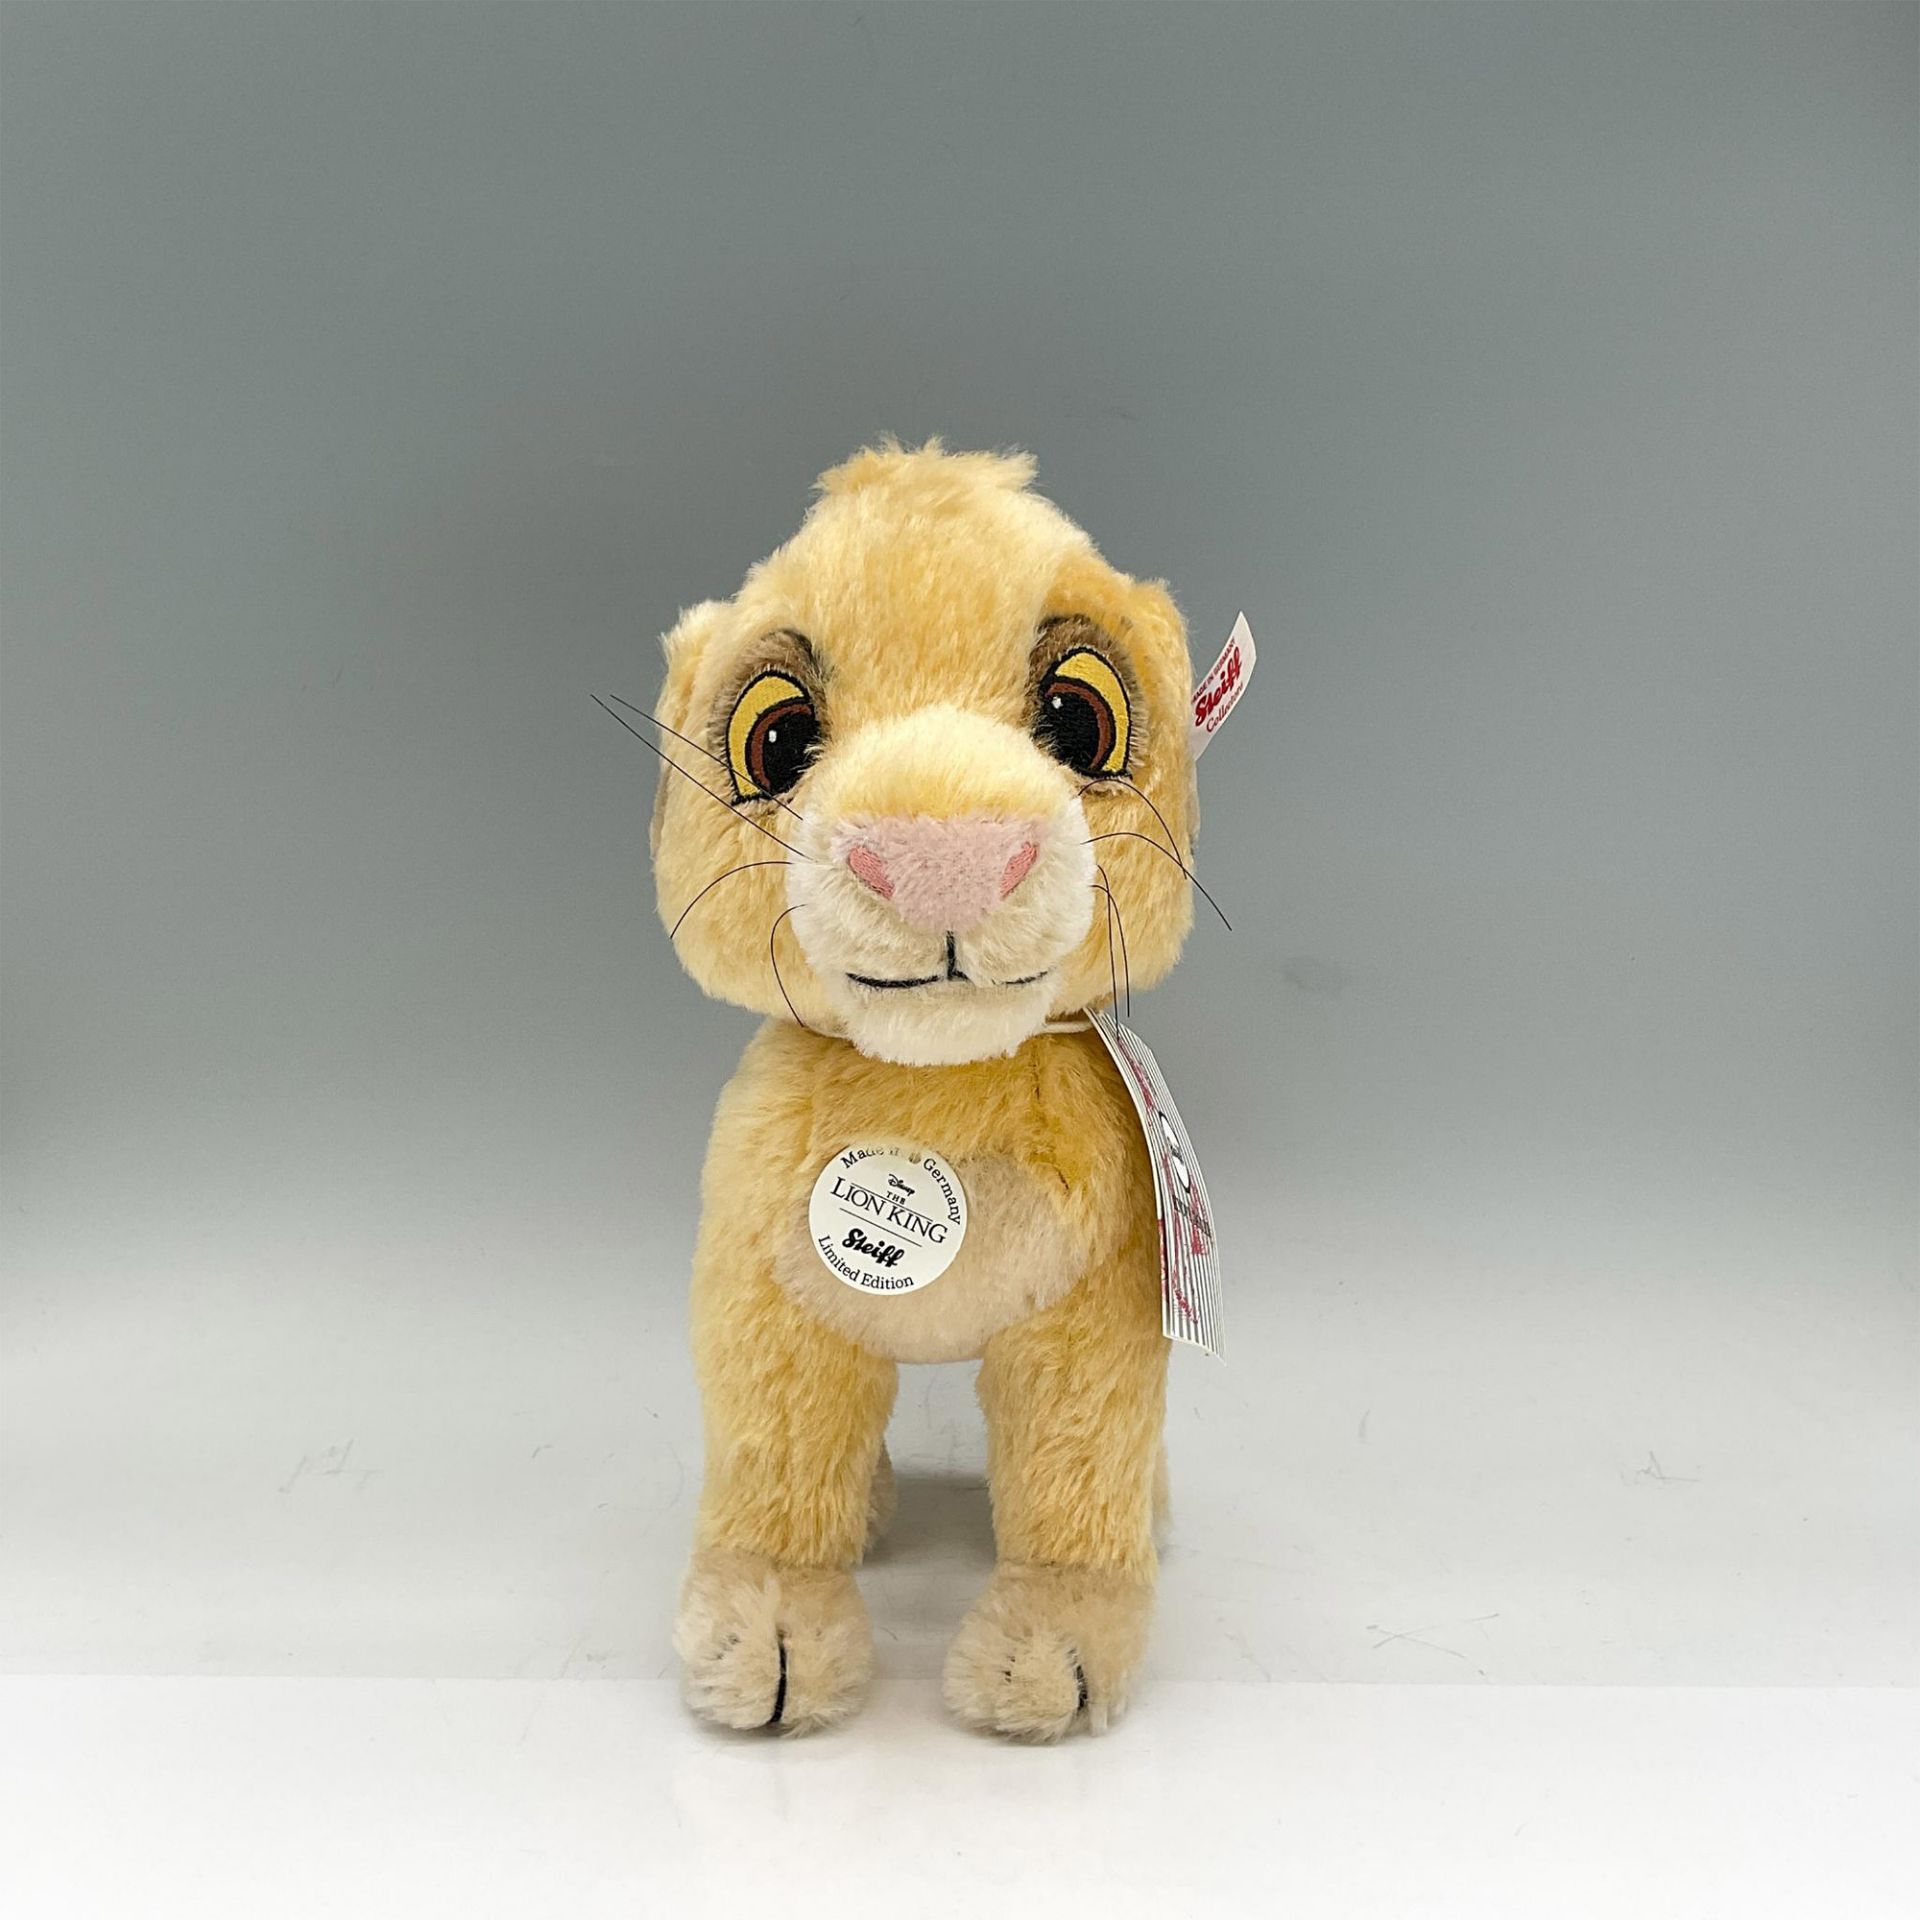 Steiff Mohair Stuffed Figure, Simba of Lion King - Image 2 of 4